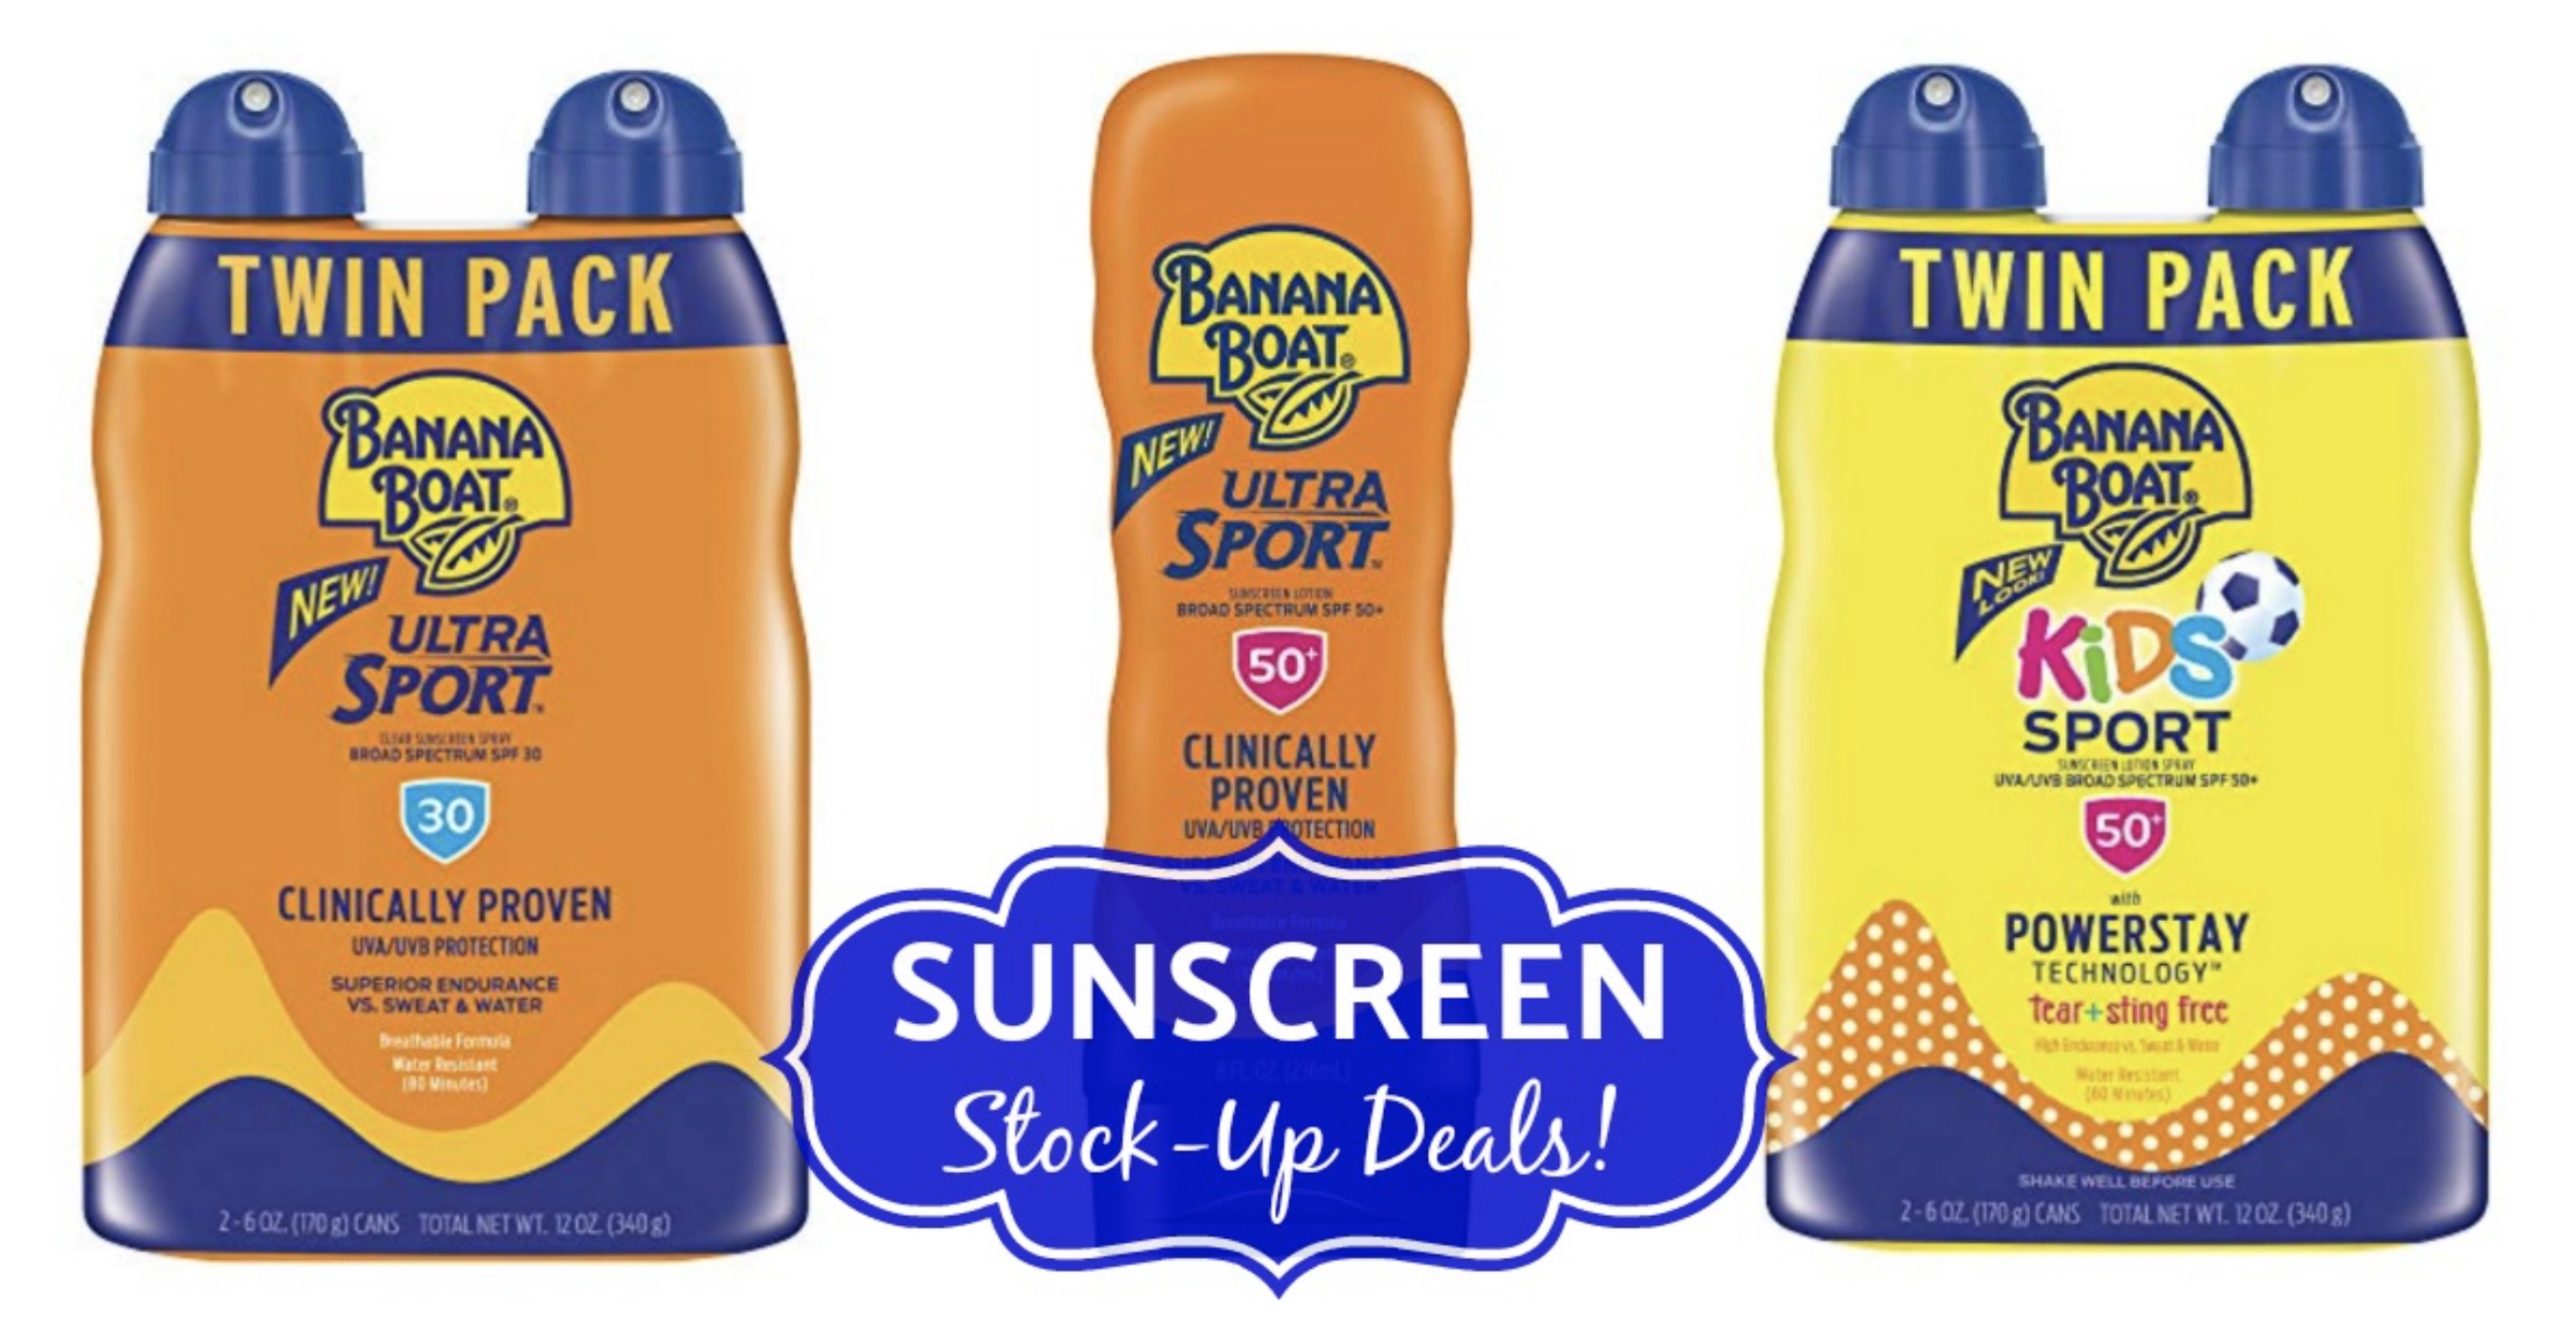 banana boat coupons sunscreen Amazon